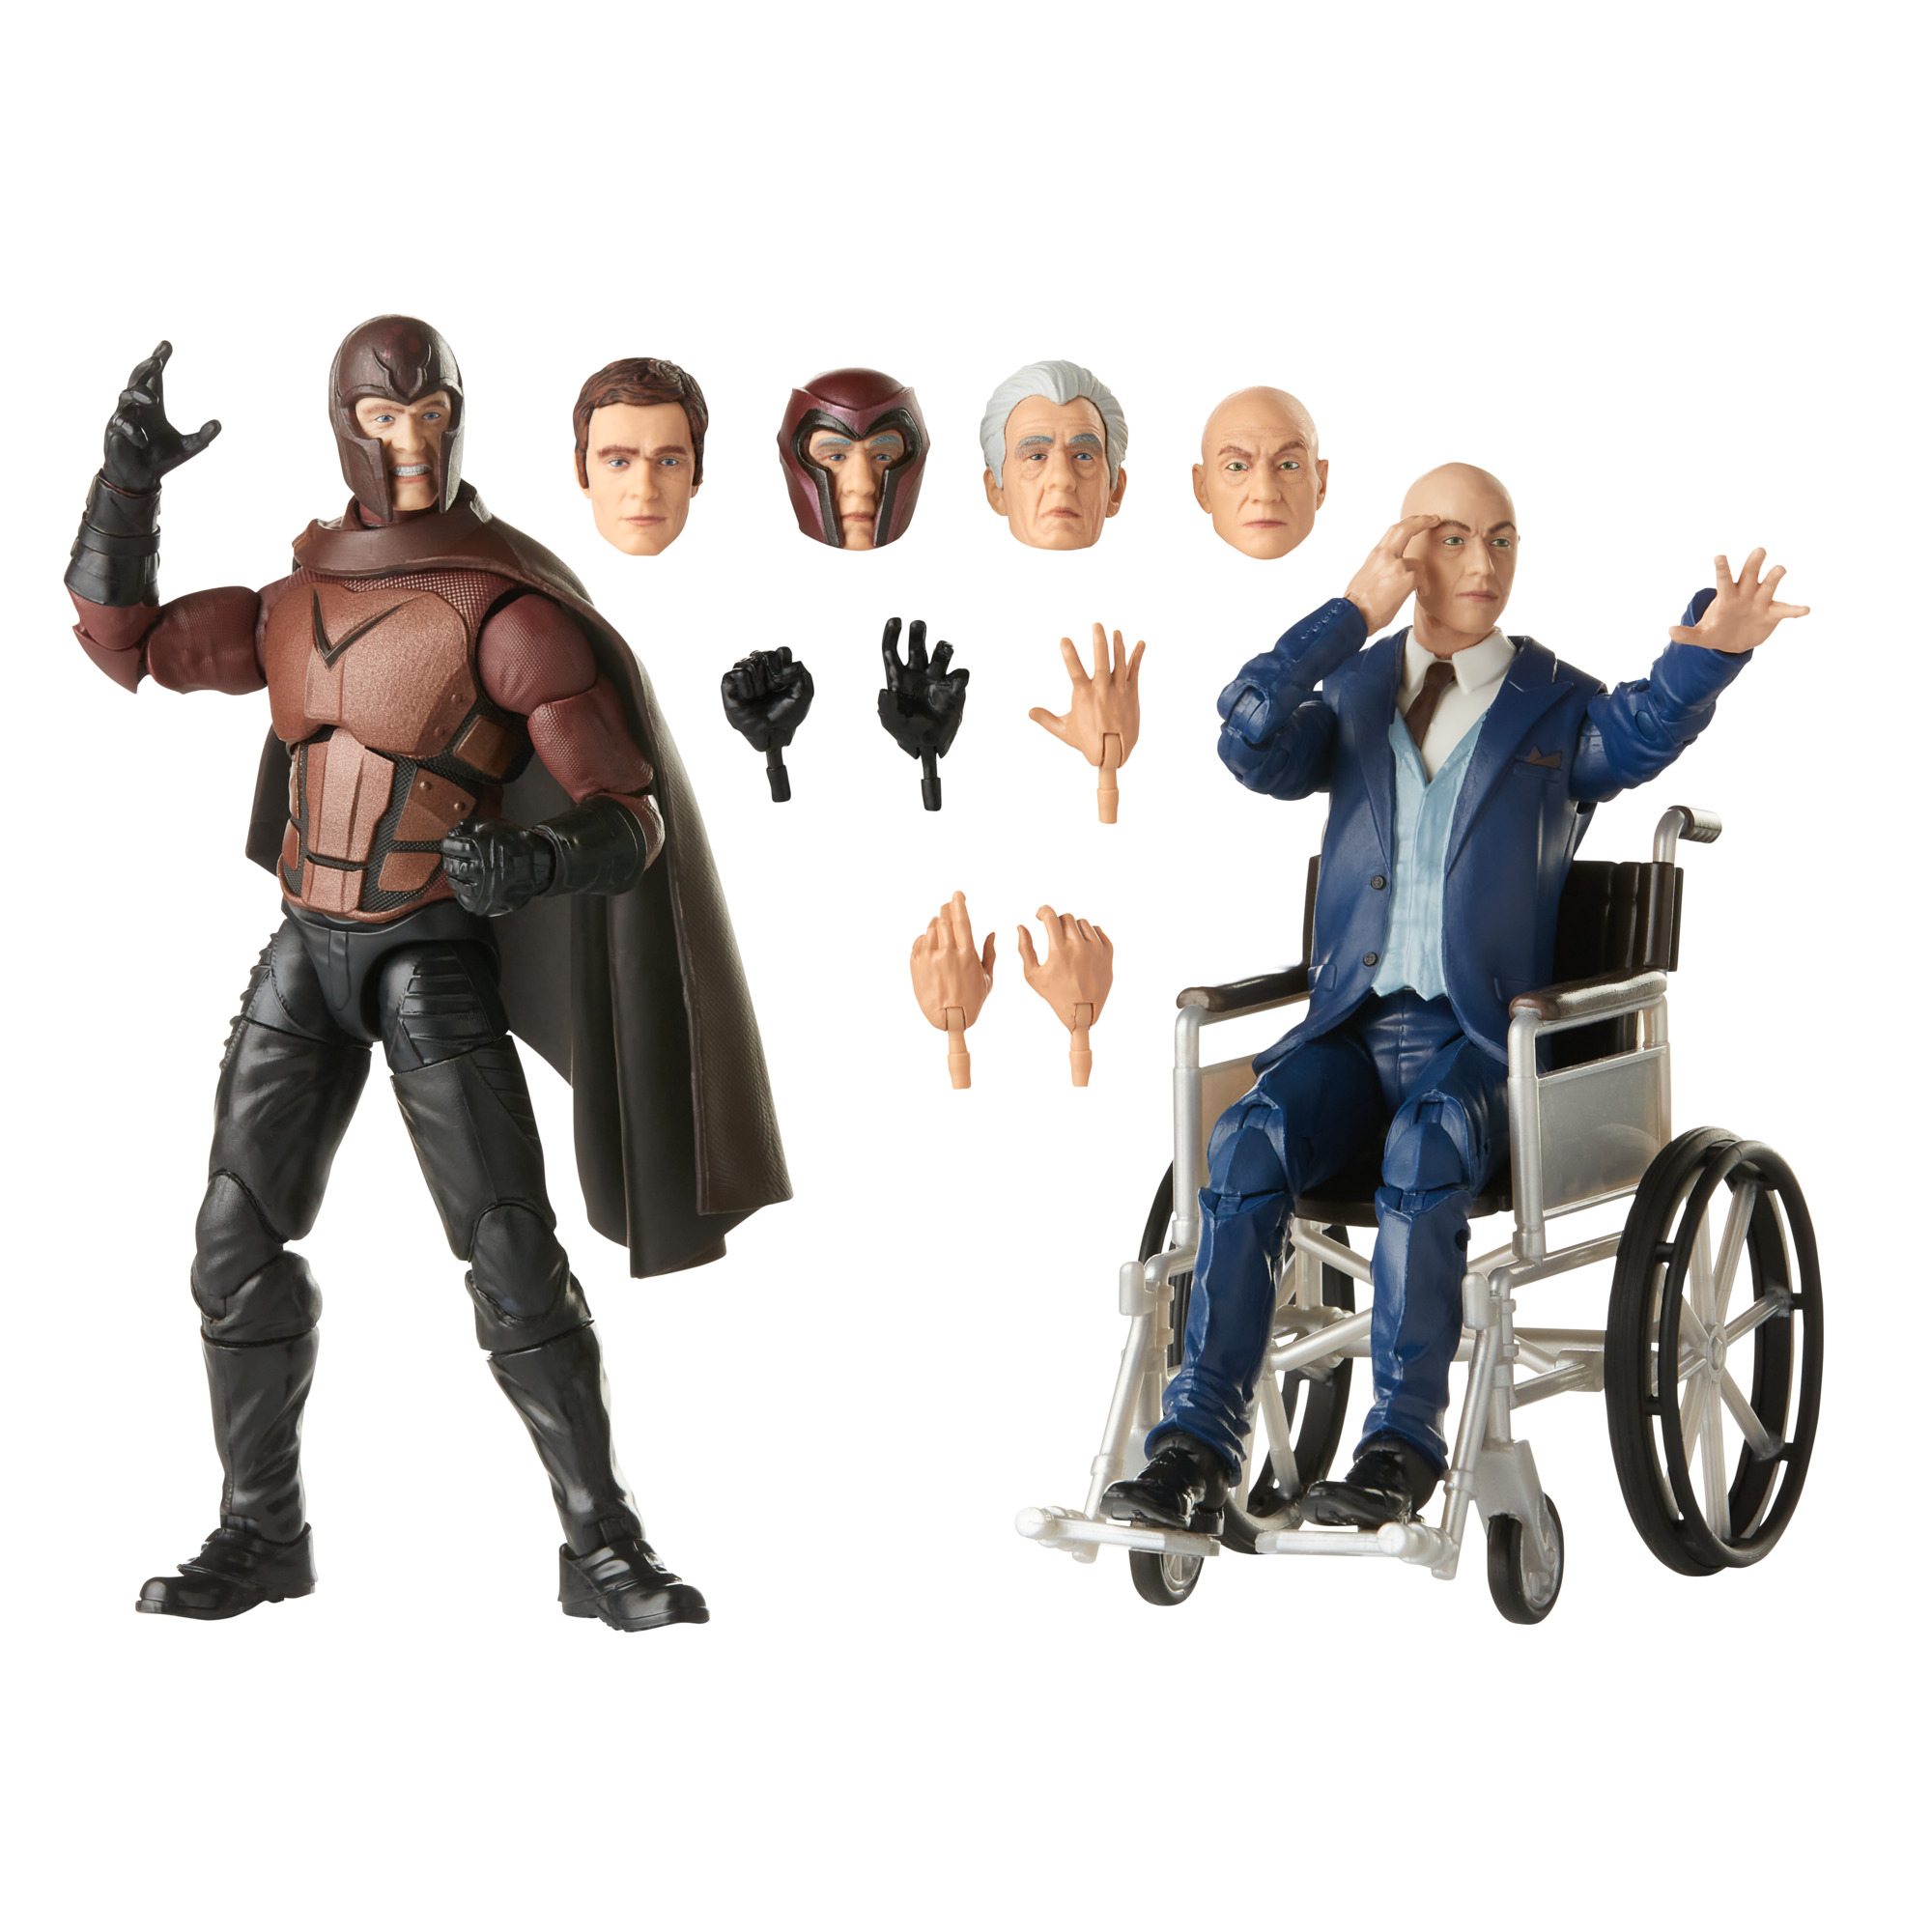 Magneto and Professor X